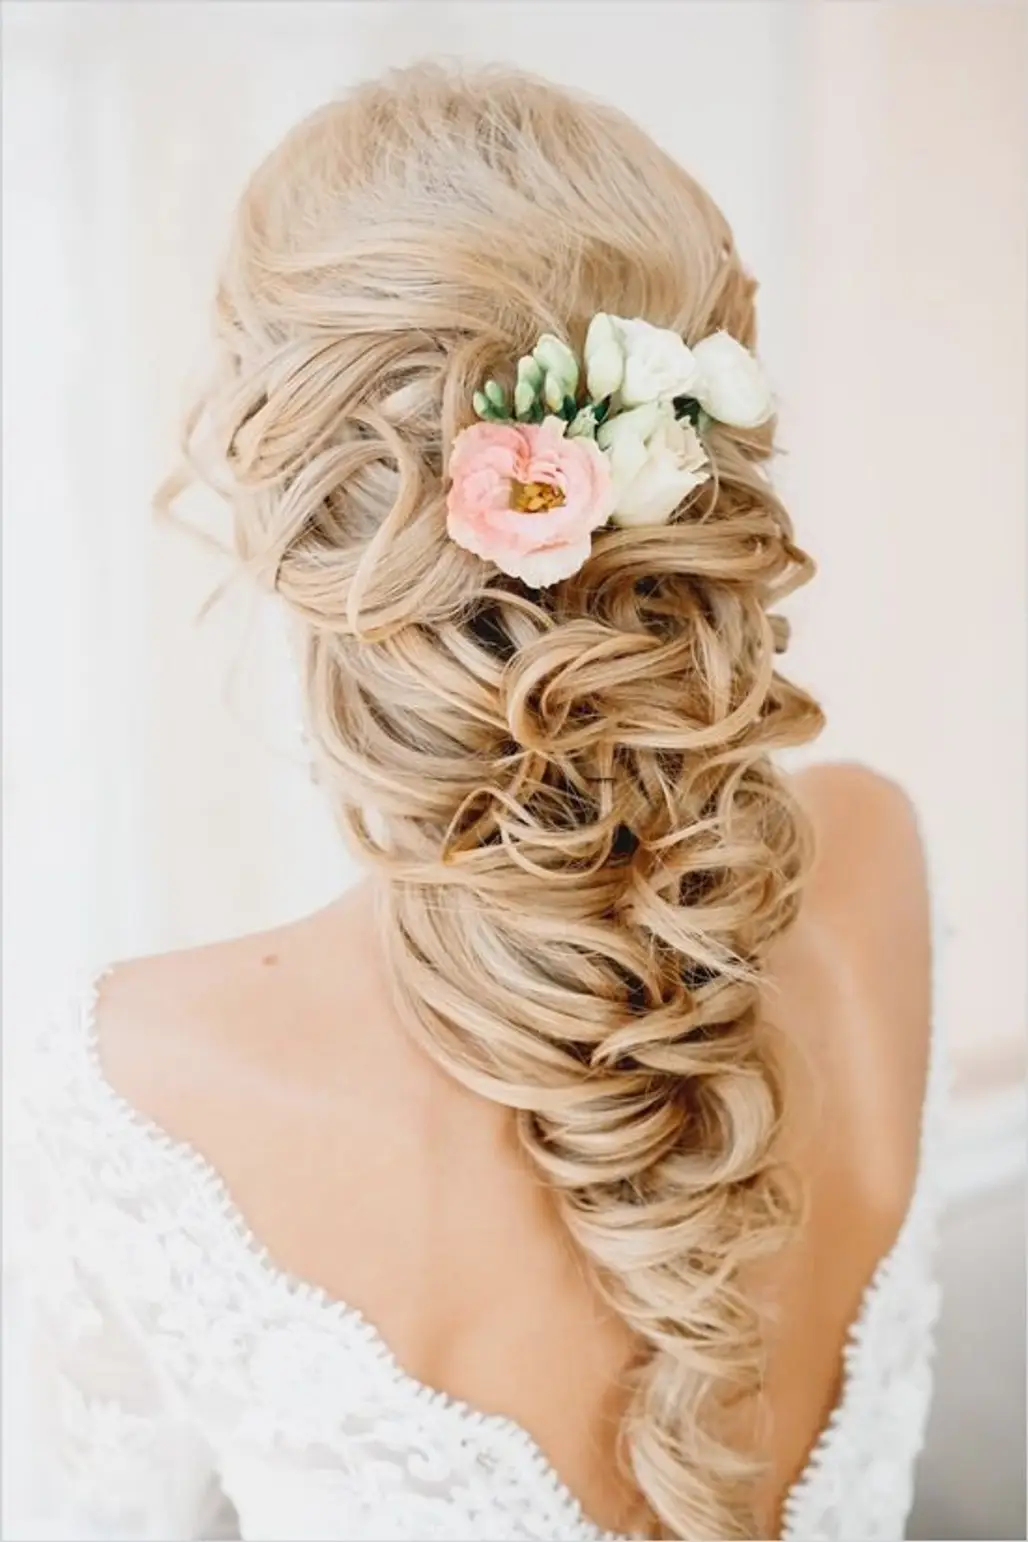 hair,hairstyle,bridal accessory,blond,long hair,